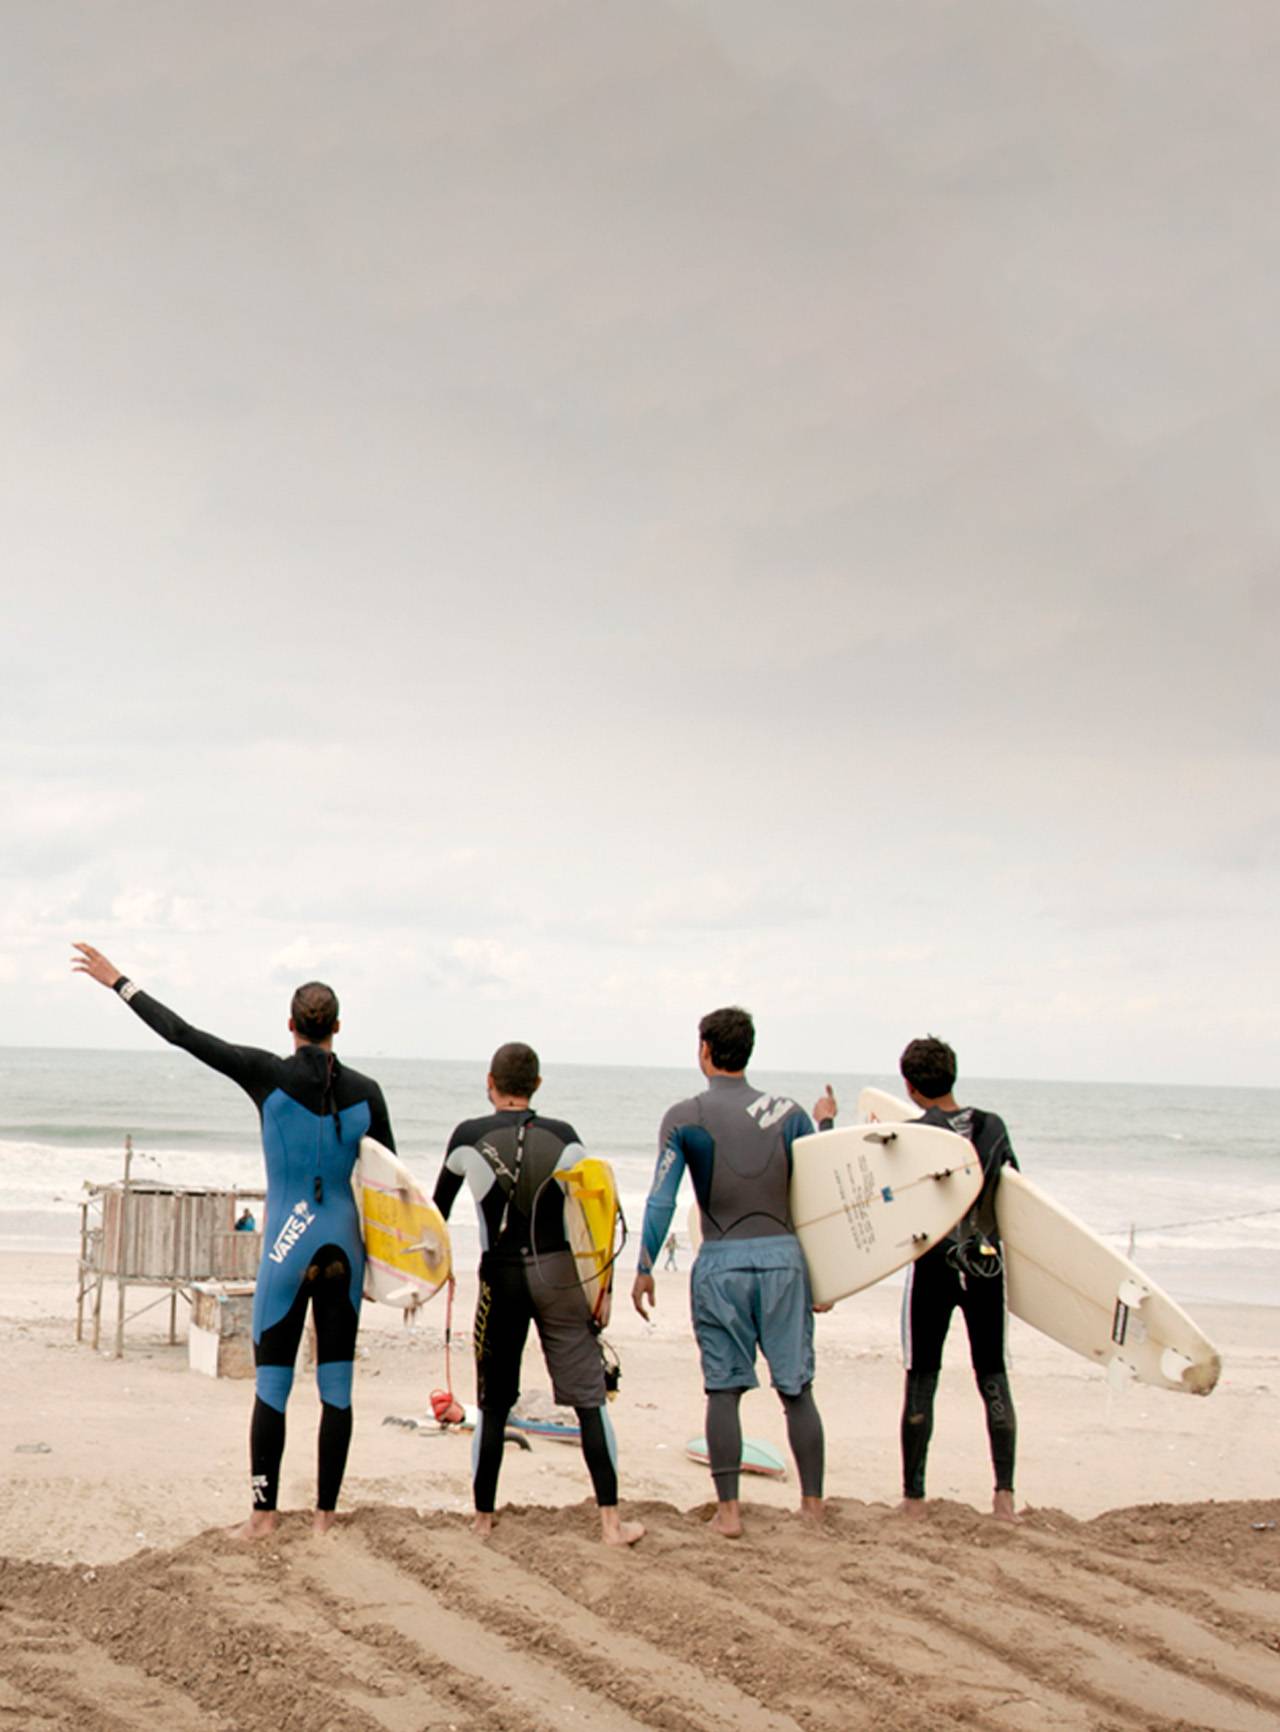 Meet the surfers